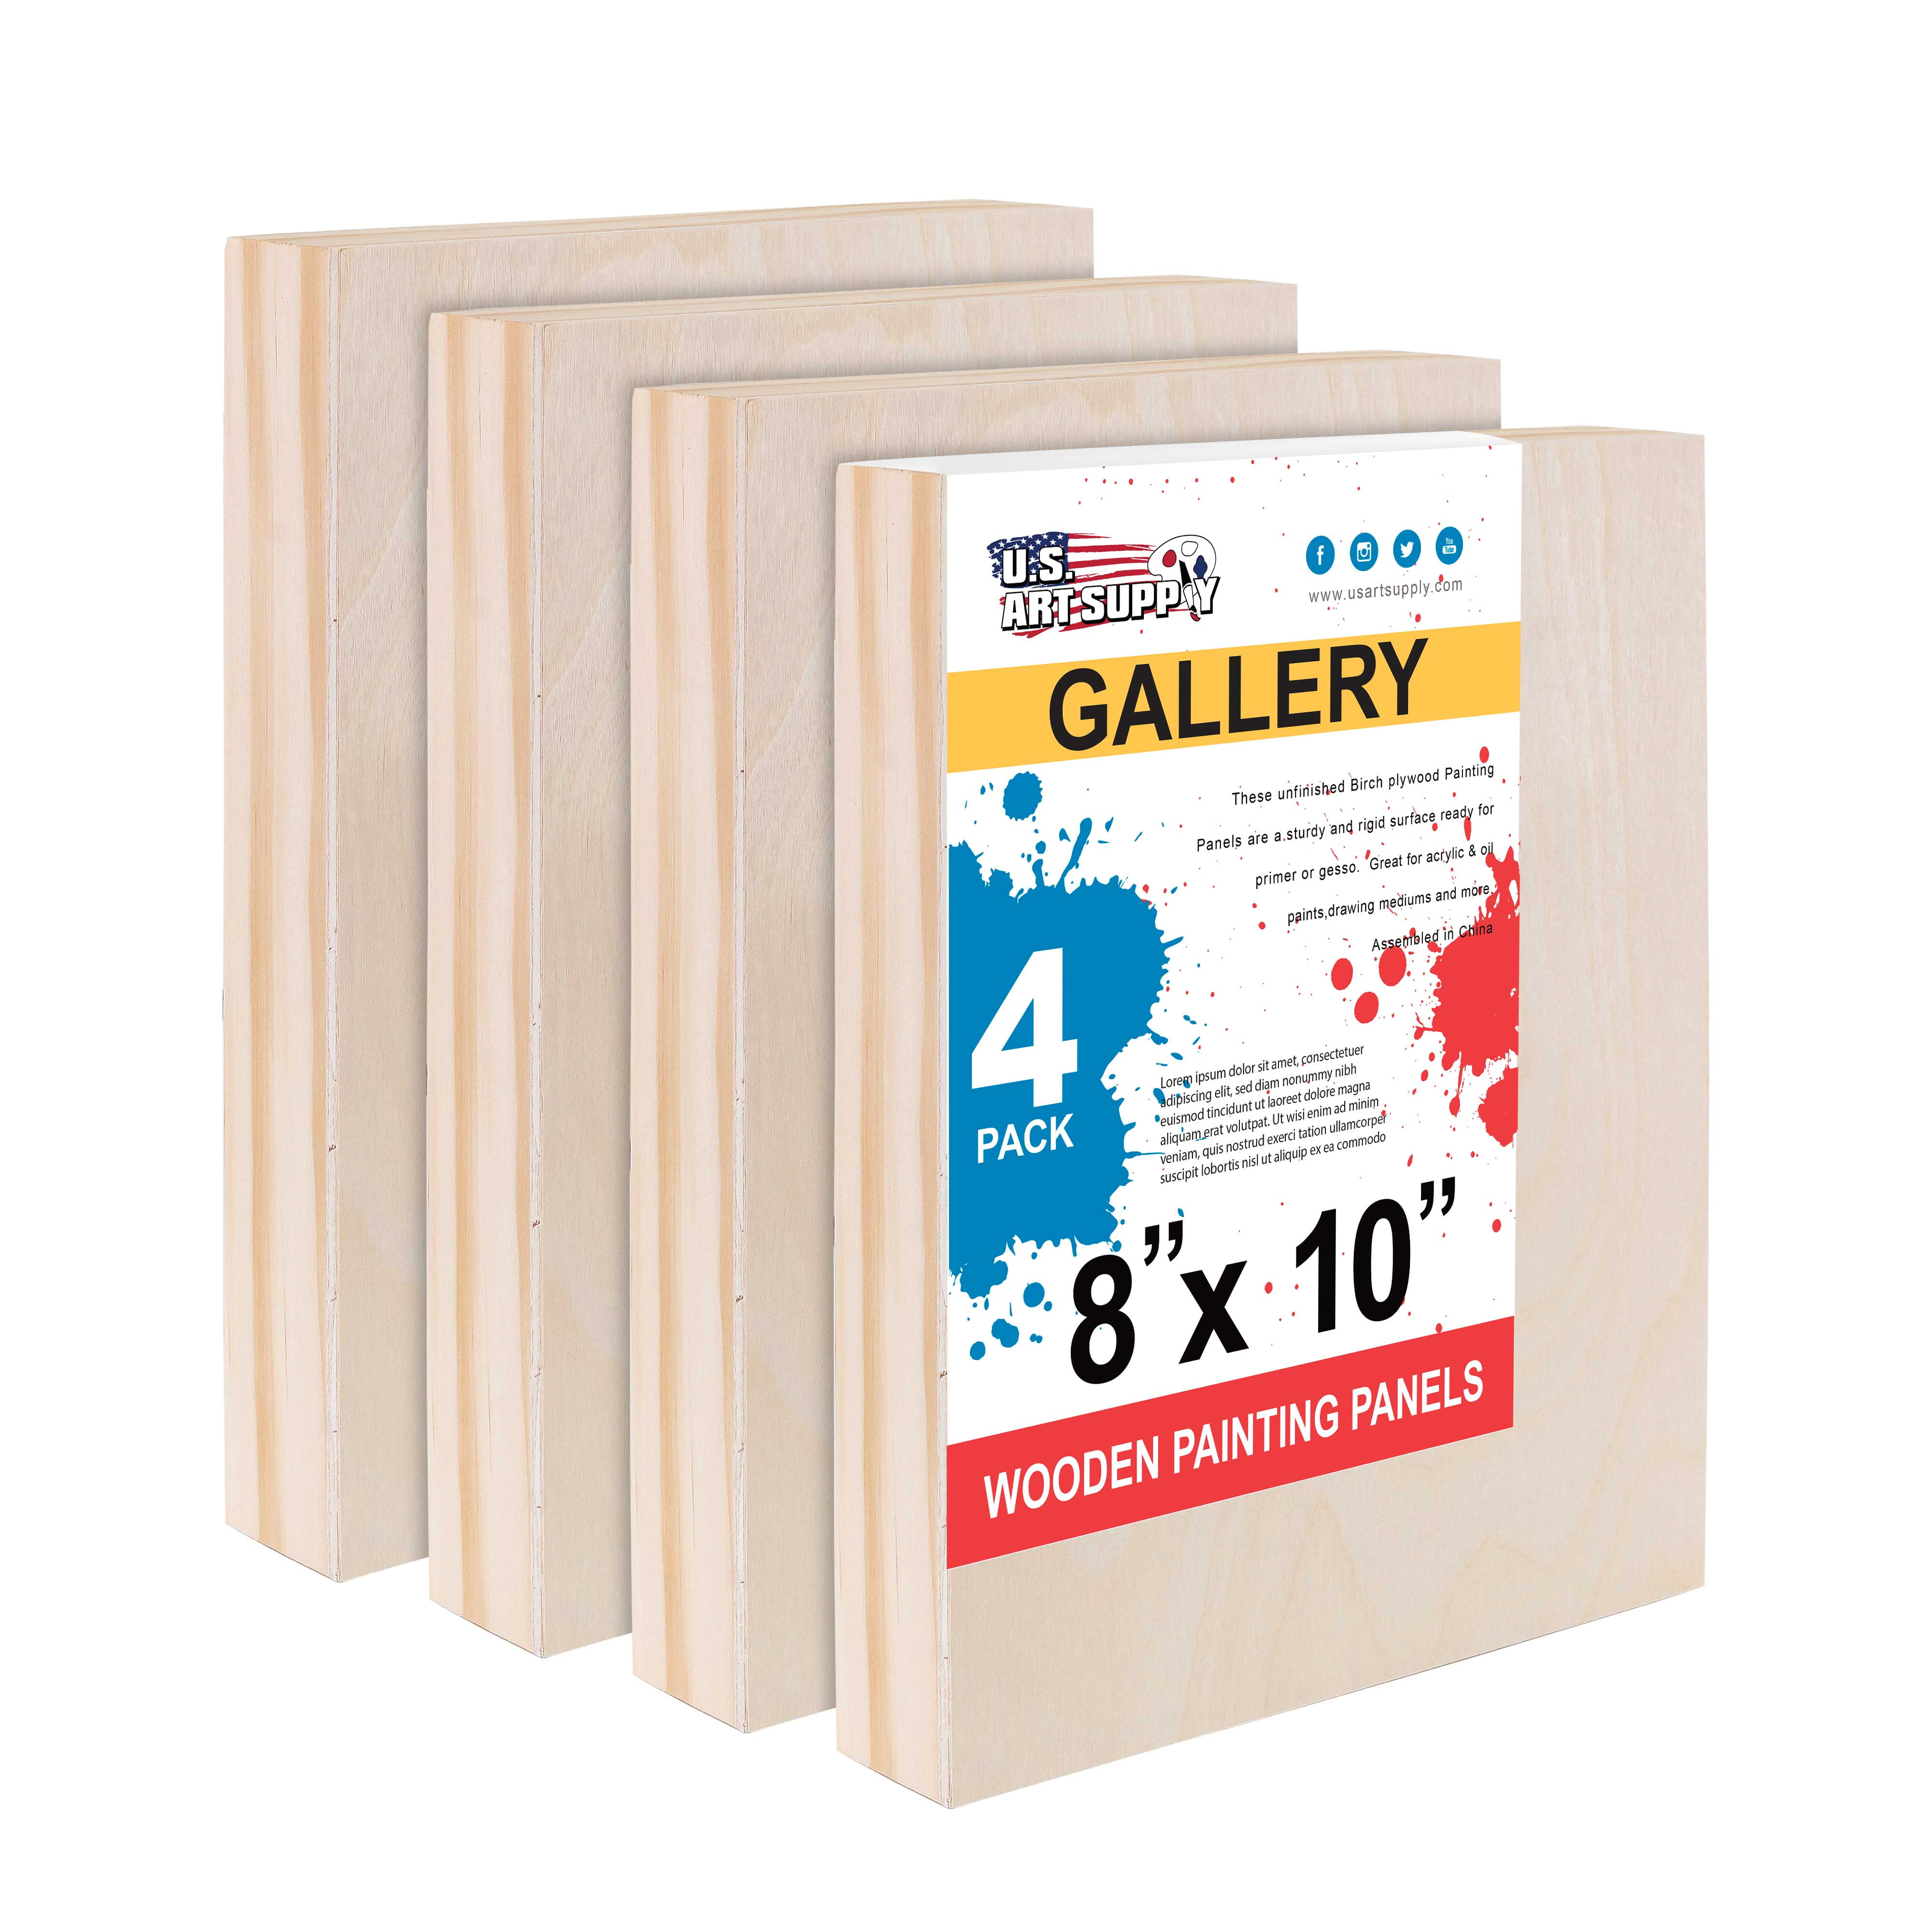 American Easel Cradled Wood Painting Panel, 20x24 : Target